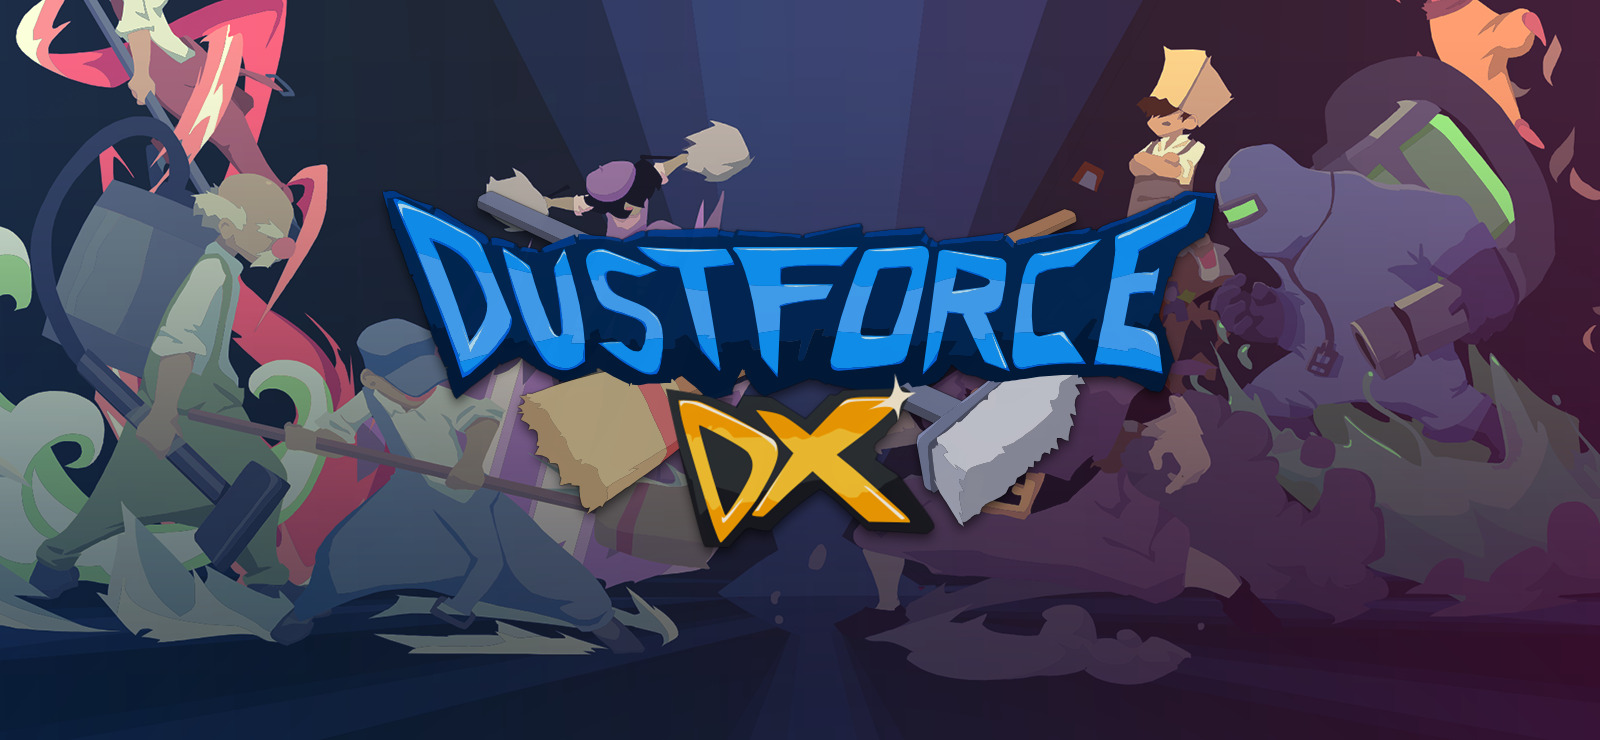 dustforce dx controller support